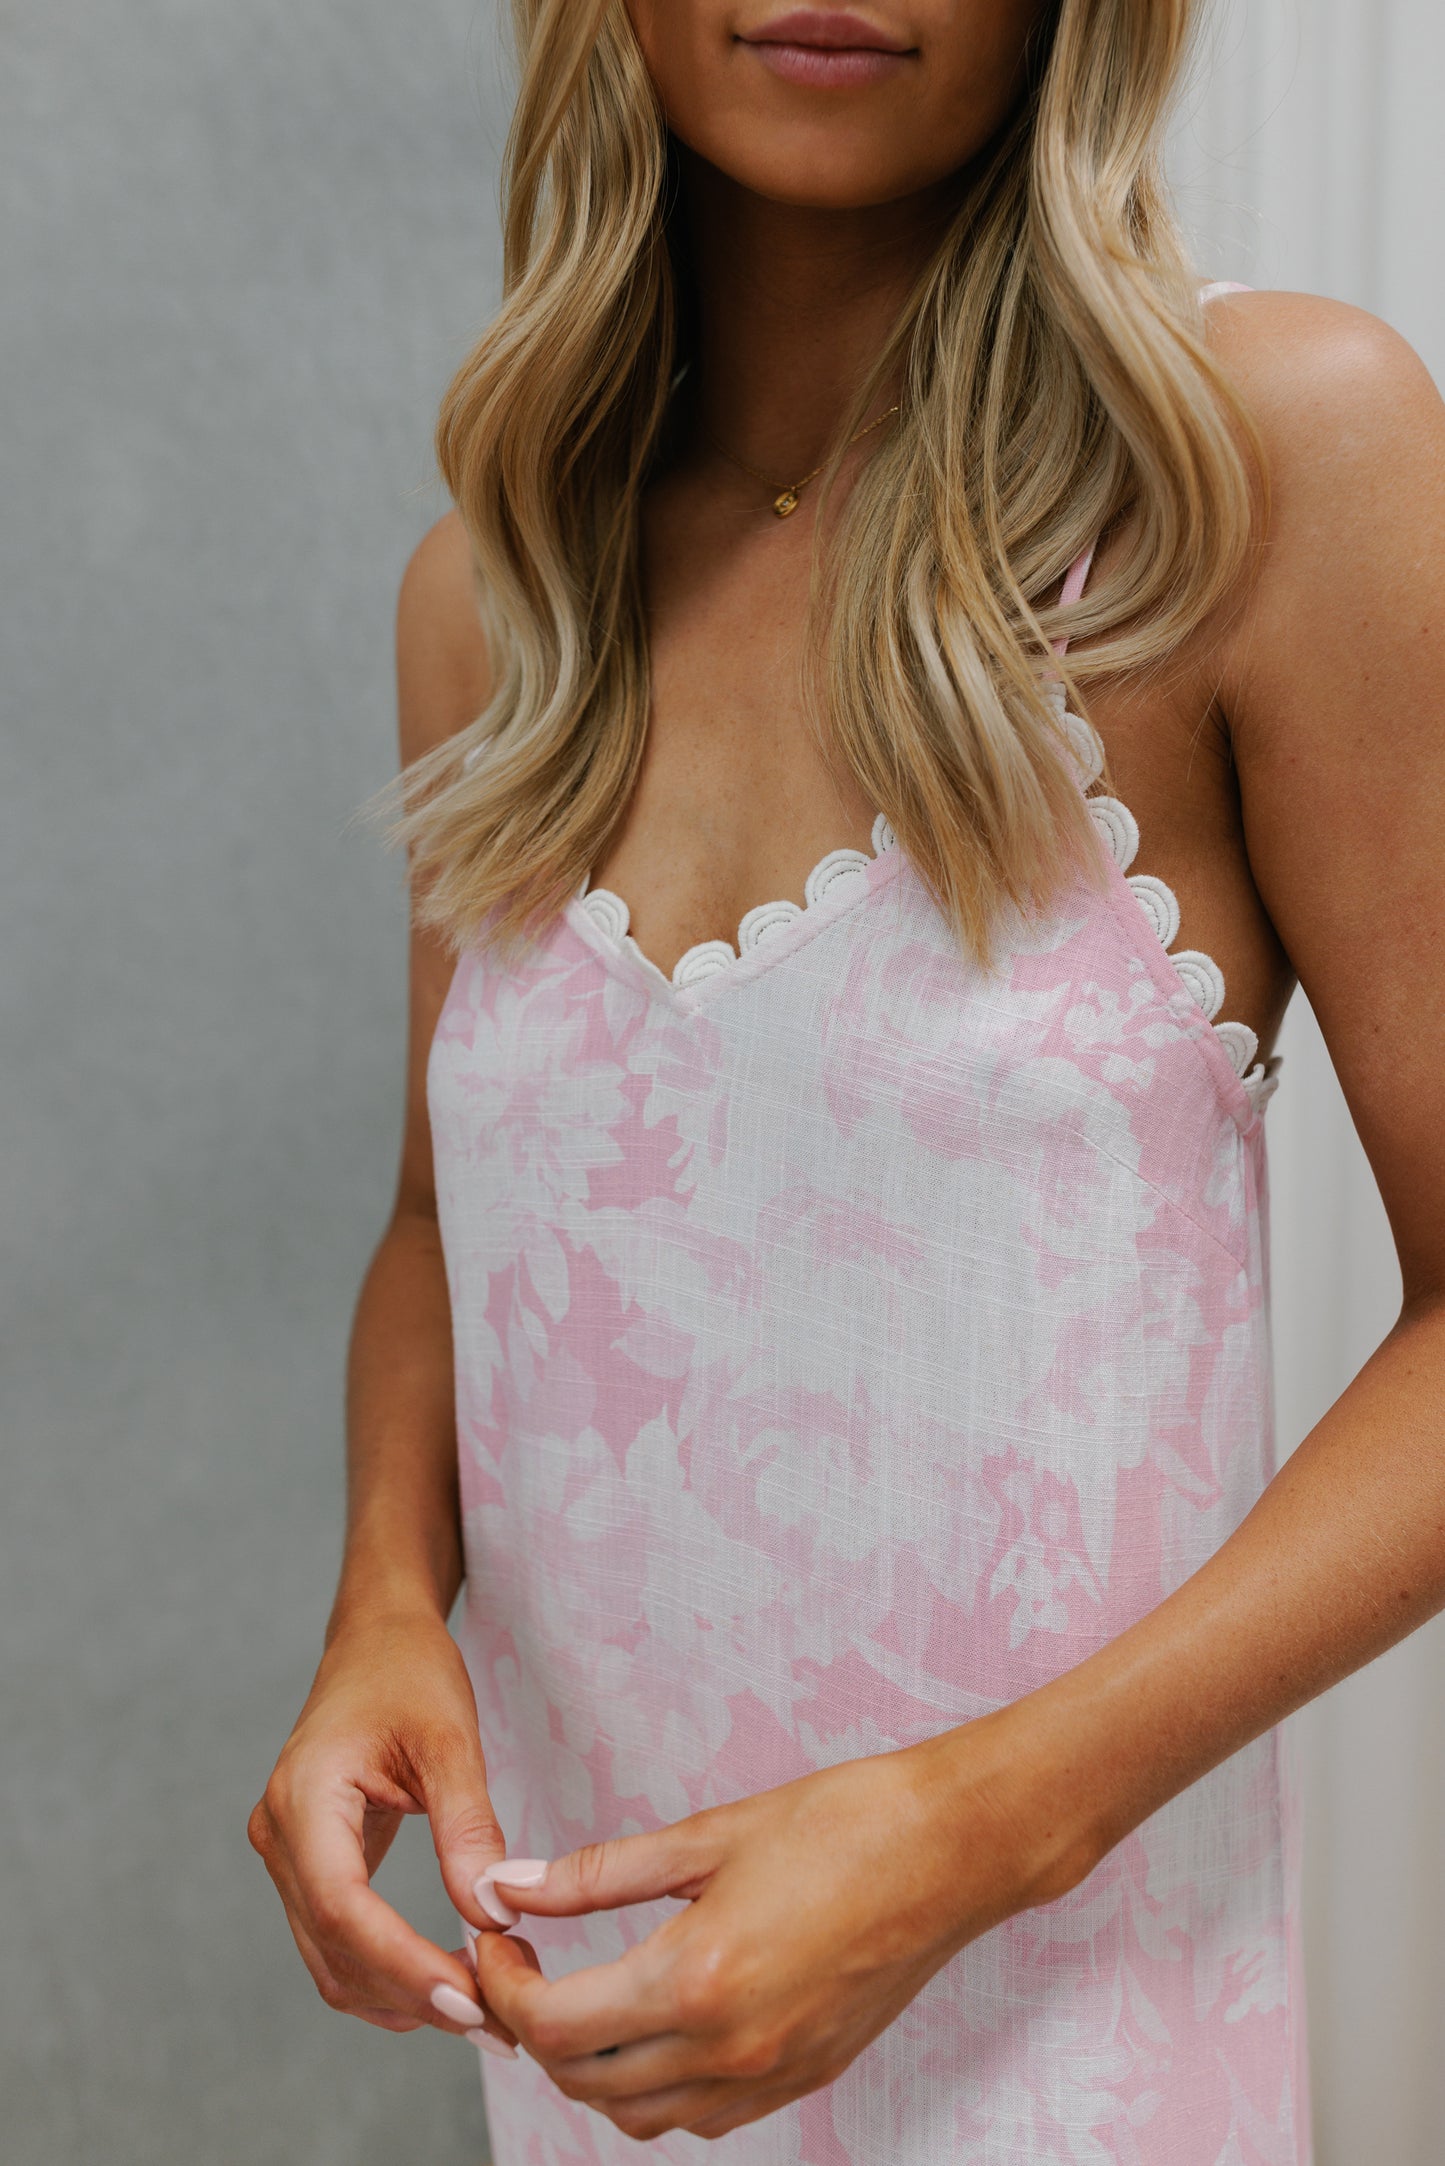 Fairlee Dress - Pink Floral